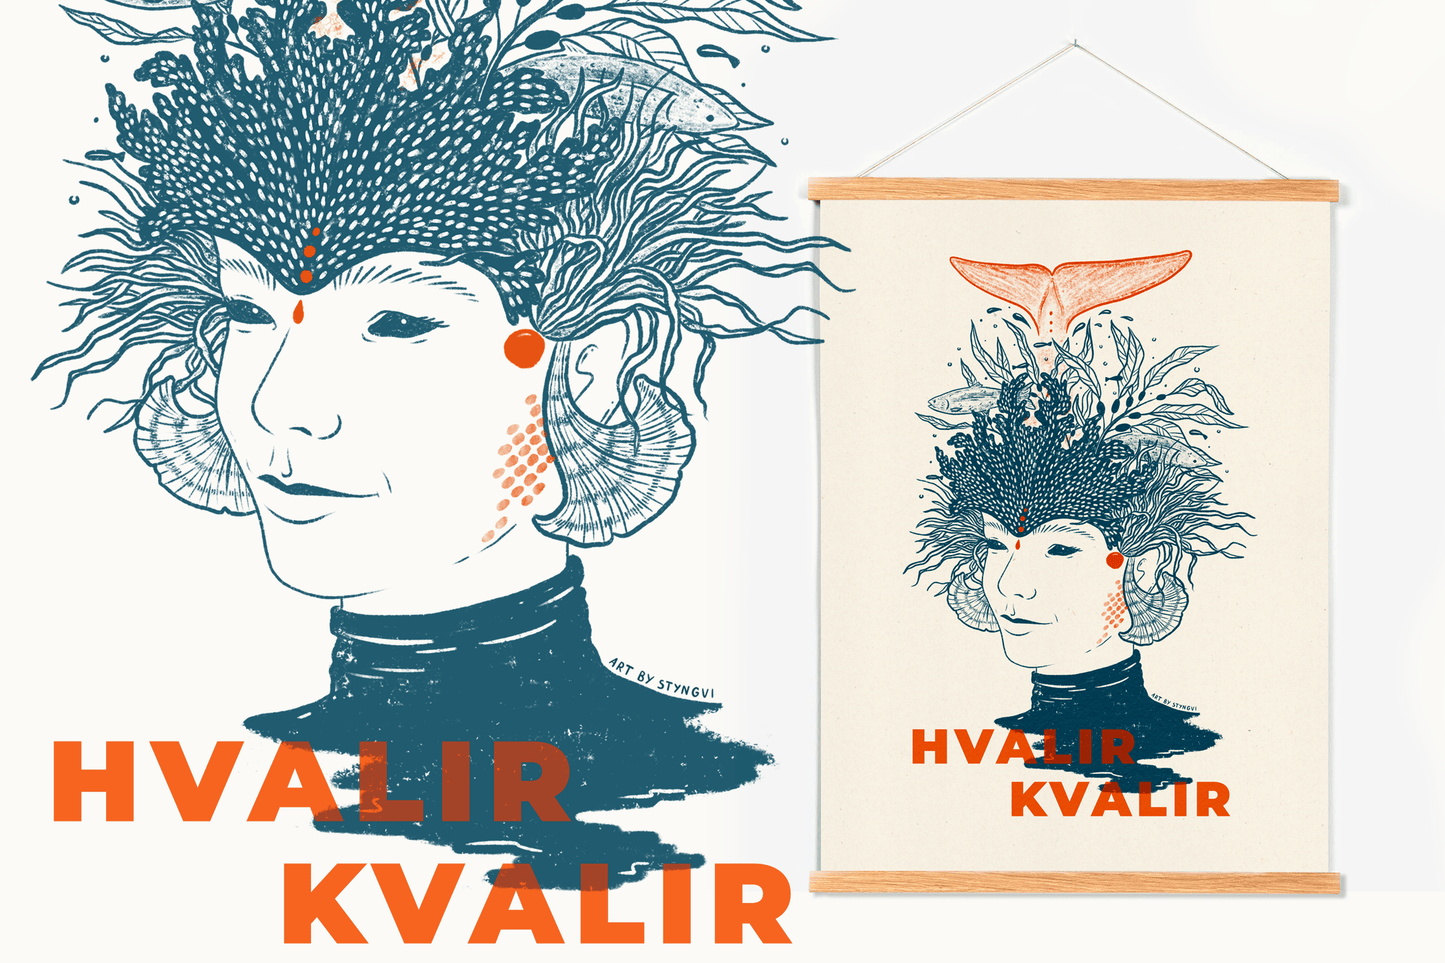 Styngvi A4 Print HVALIR KVALIR - Limited Edition A4 Print